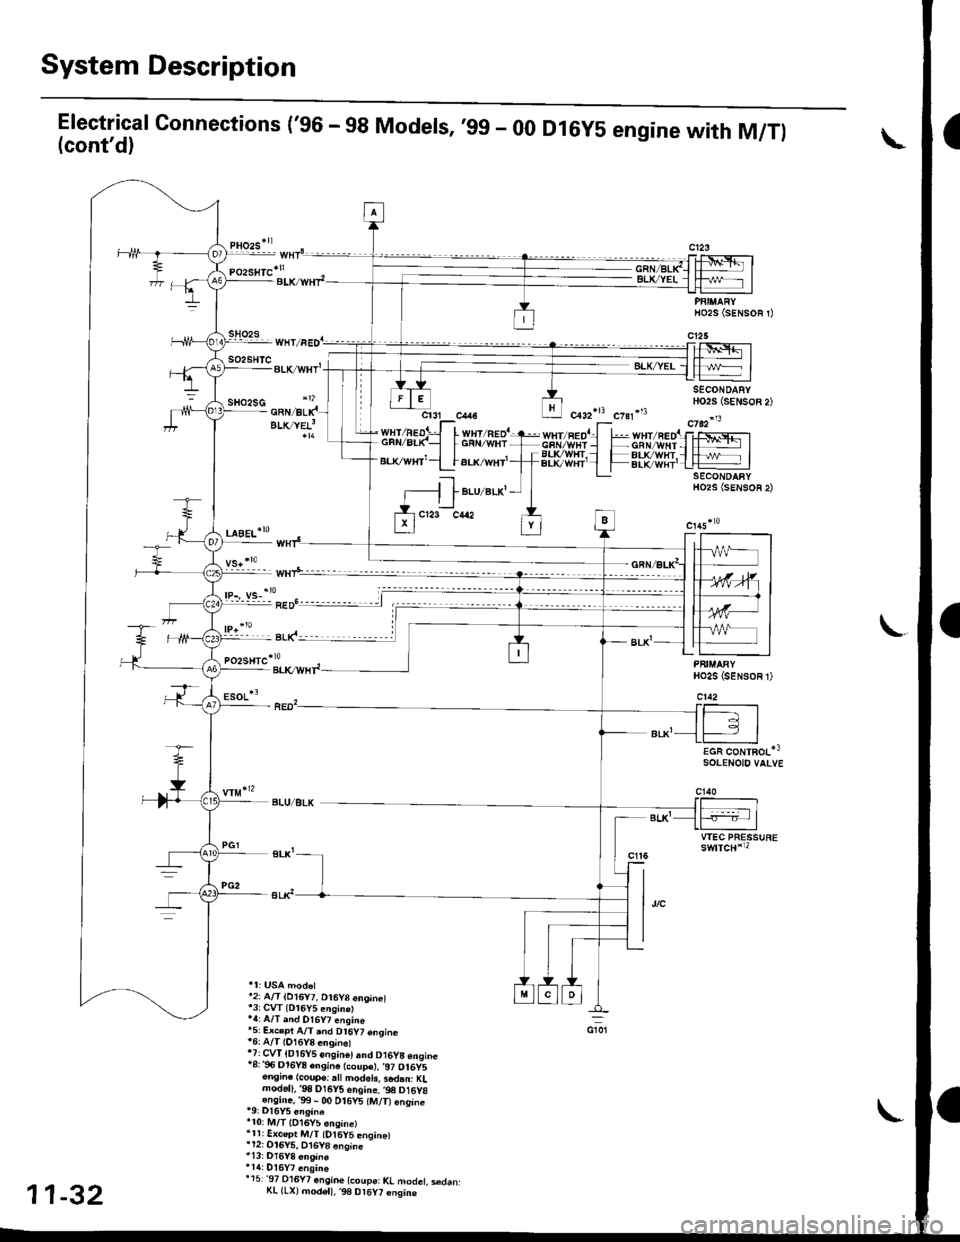 HONDA CIVIC 1997 6.G User Guide System Description
Electrical Connections (96 - 98 Models, ,99 - 00 Dl6y5 engine with M/T)(contd)
ptozs"
pozslttc*rr
WHT,REDl
s02sHTc-BLK/WHT
aLKlyeL!
LraeL*ro
pozsntc*lu
:soL*3
BLU/ALK
12: A/T (